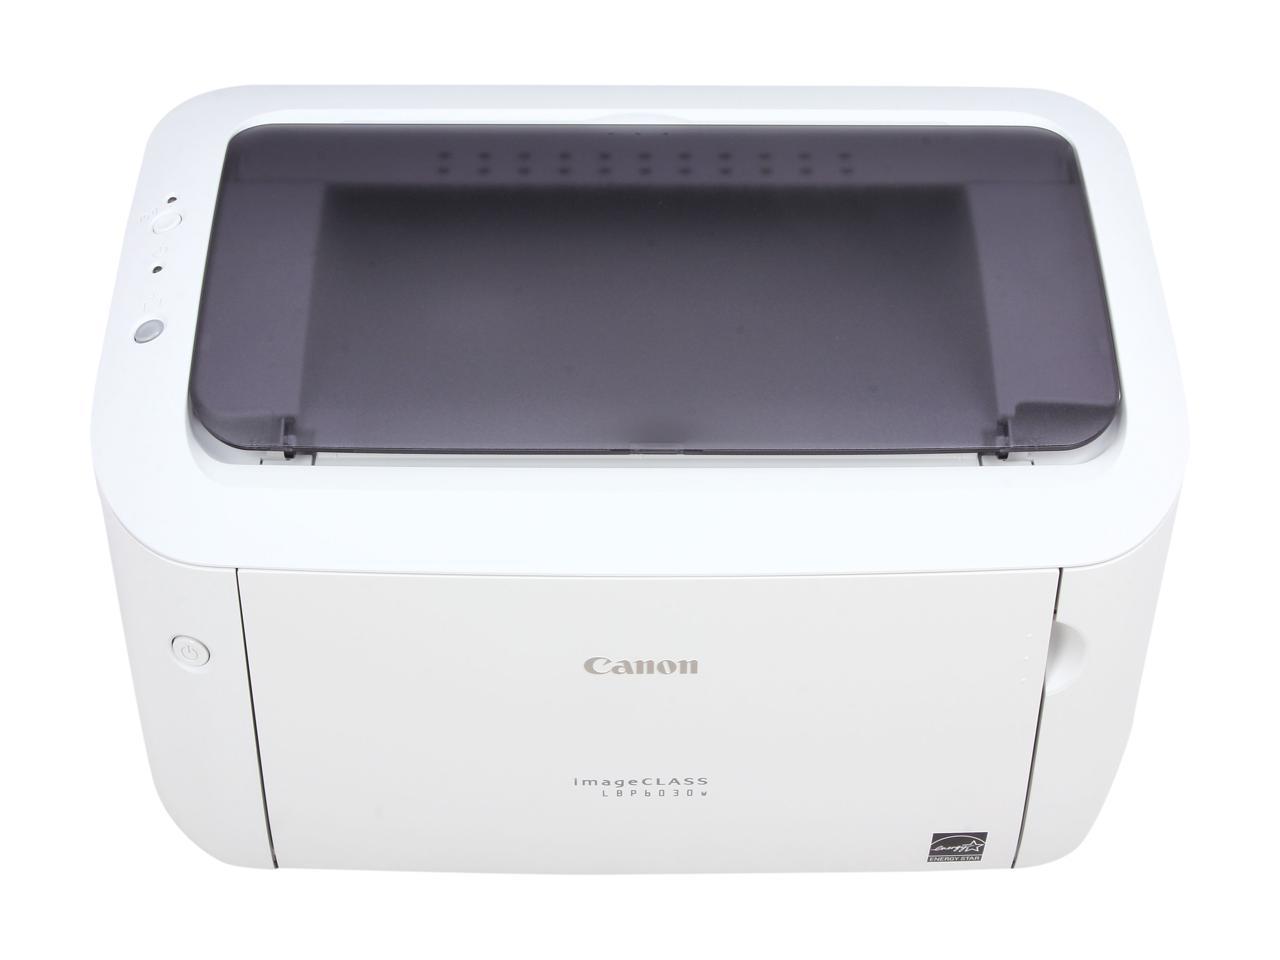 Canon Imageclass Lbp6030w Wireless Monochrome Laser Printer 19 Ppm 9124